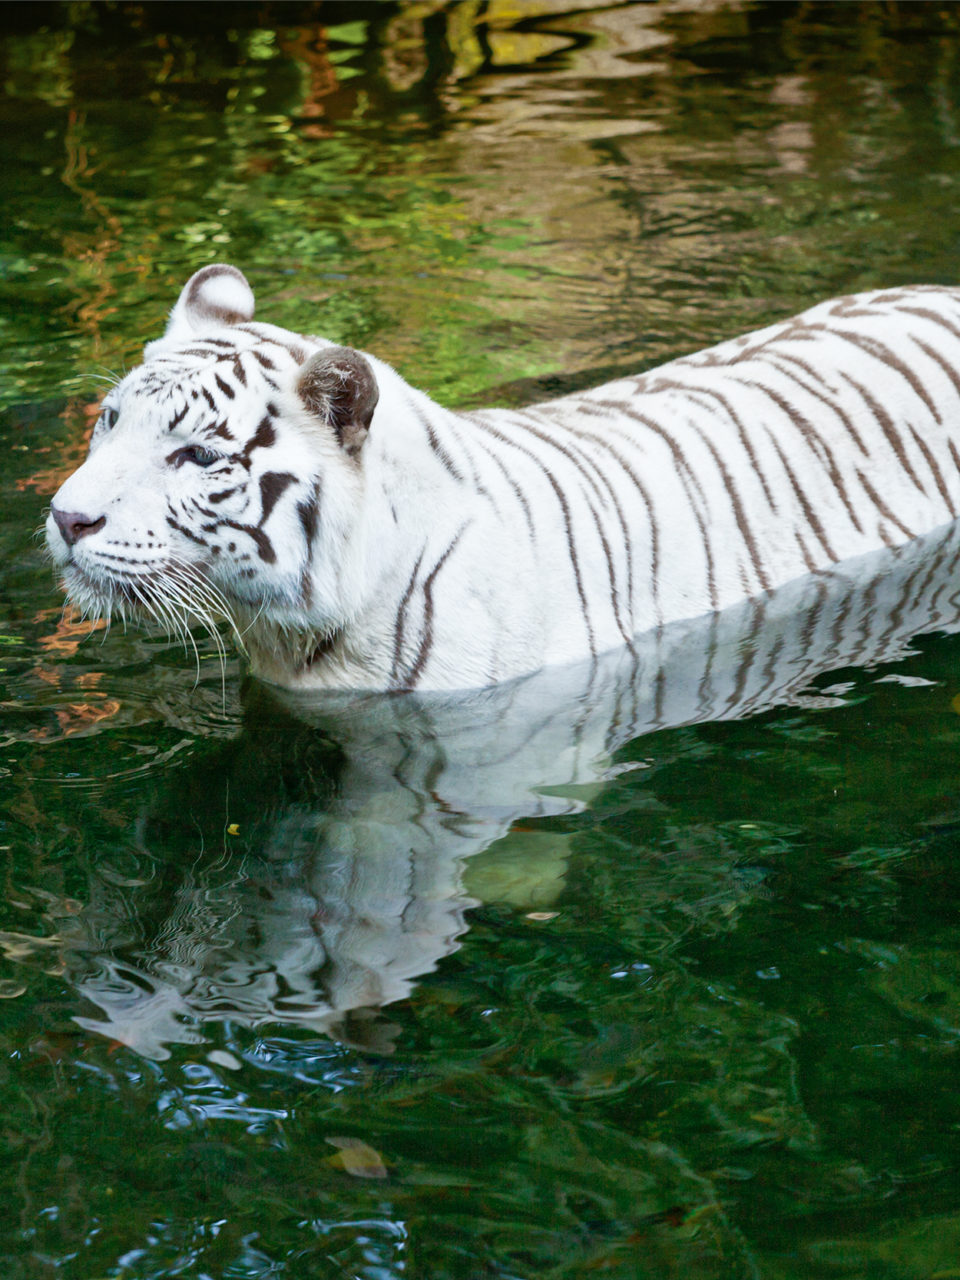 https://www.planetavenue.com/wp-content/uploads/2022/01/white-tiger-swimming-2021-08-26-22-59-16-utc-960x1280.jpg